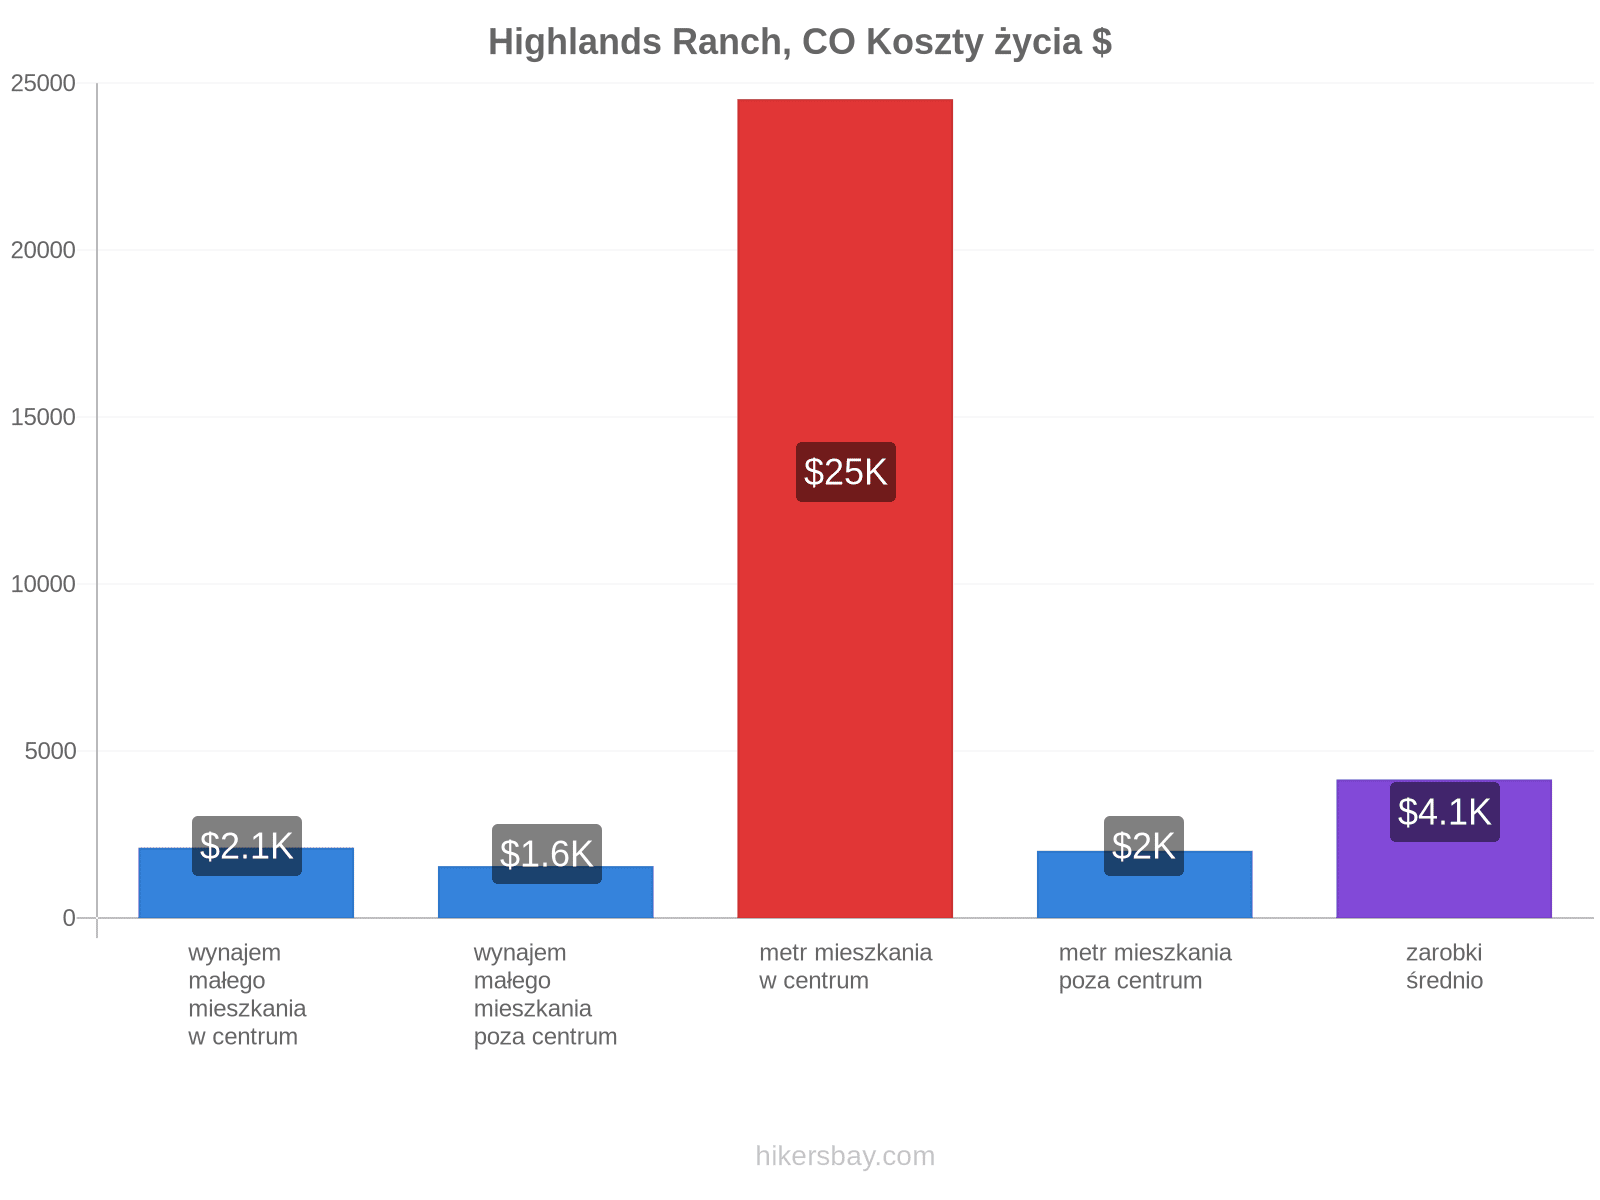 Highlands Ranch, CO koszty życia hikersbay.com